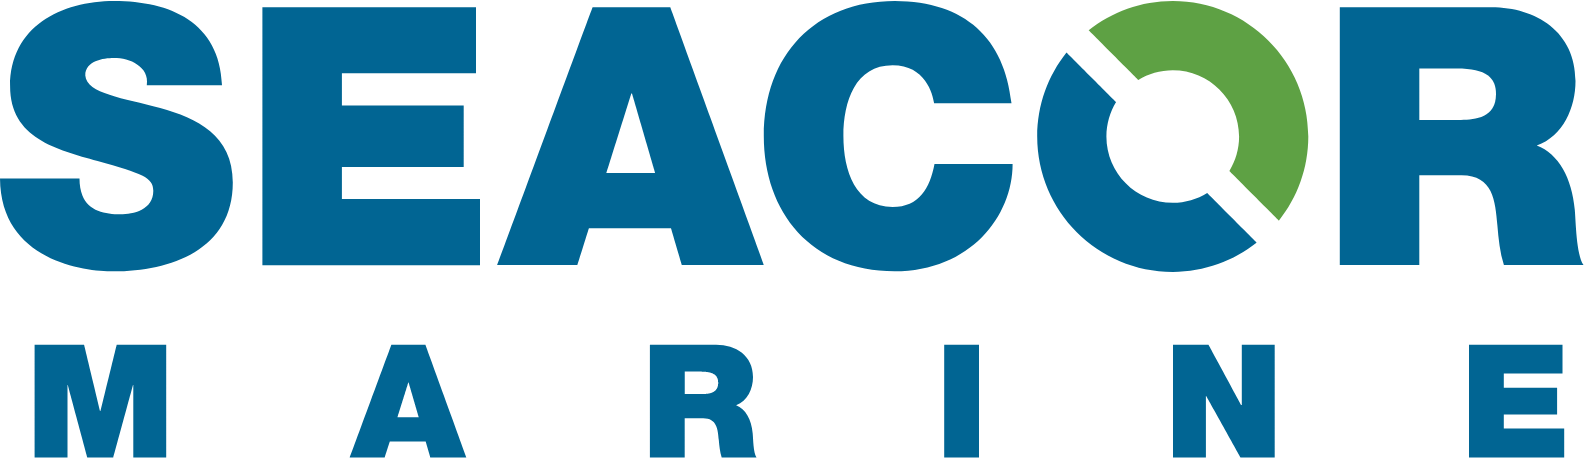 SEACOR Marine logo large (transparent PNG)